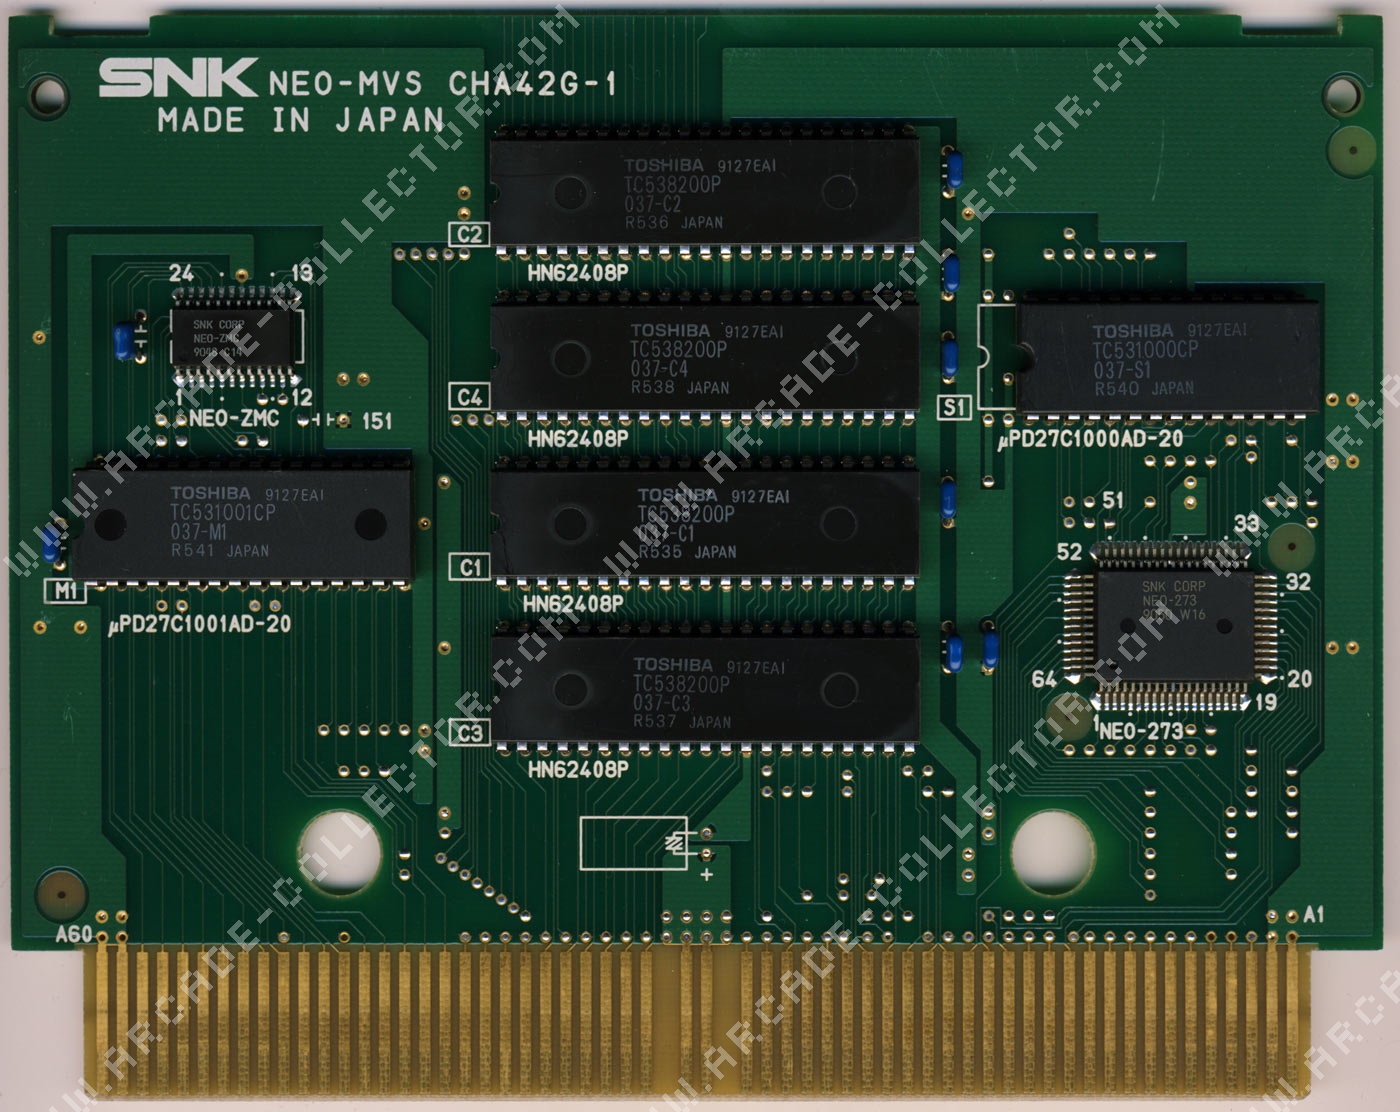 Crossed Swords (Arcade, Neo Geo) (gamerip) (1991) MP3 - Download